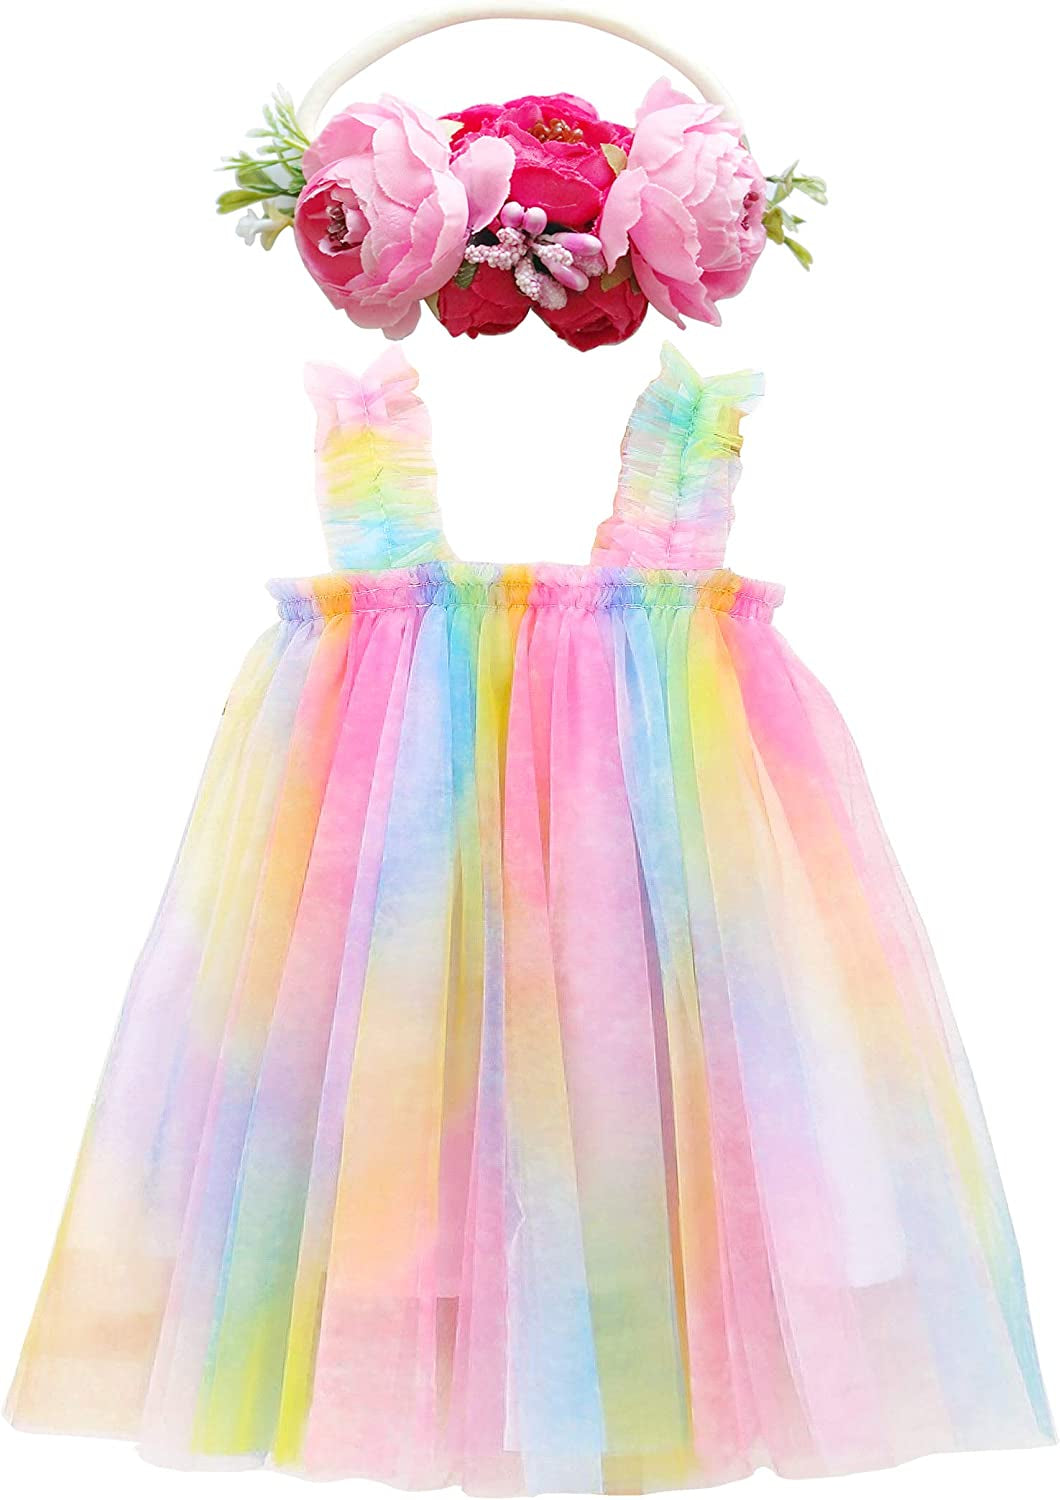 Layered Tulle Tutu Dress for Toddler Girls,Baby Girl Rainbow Tutu Princess Skirt Set with Flower Headband.